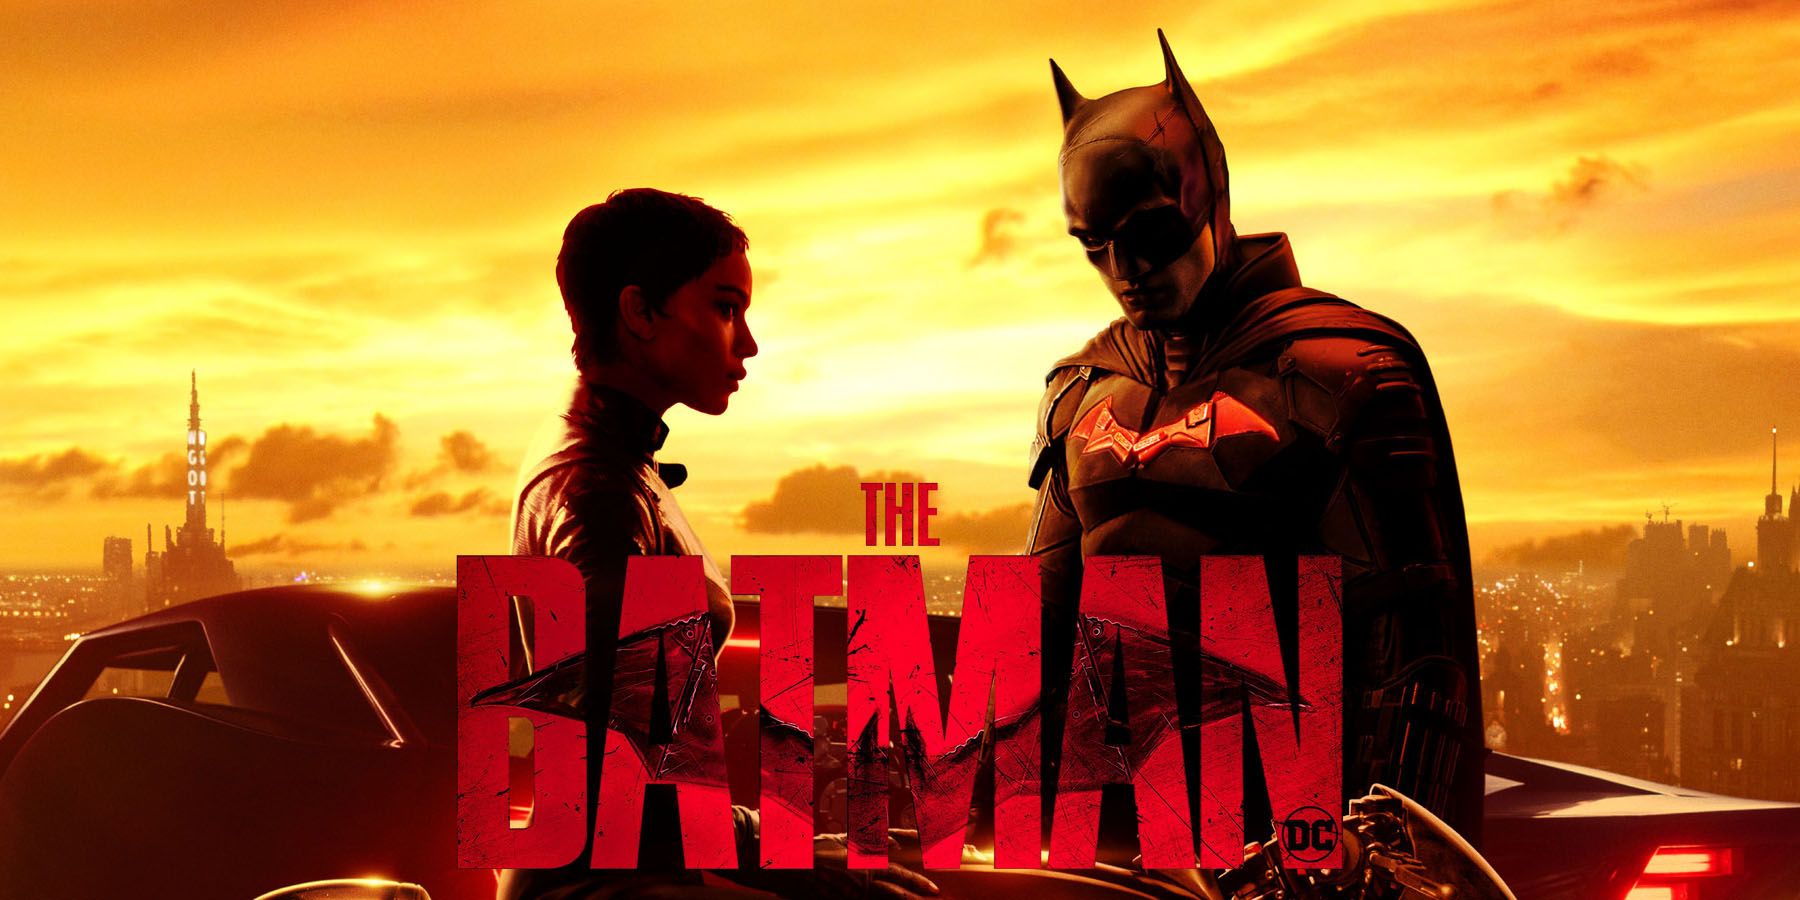 Robert Pattinson's The Batman Is Certified Fresh On Rotten Tomatoes